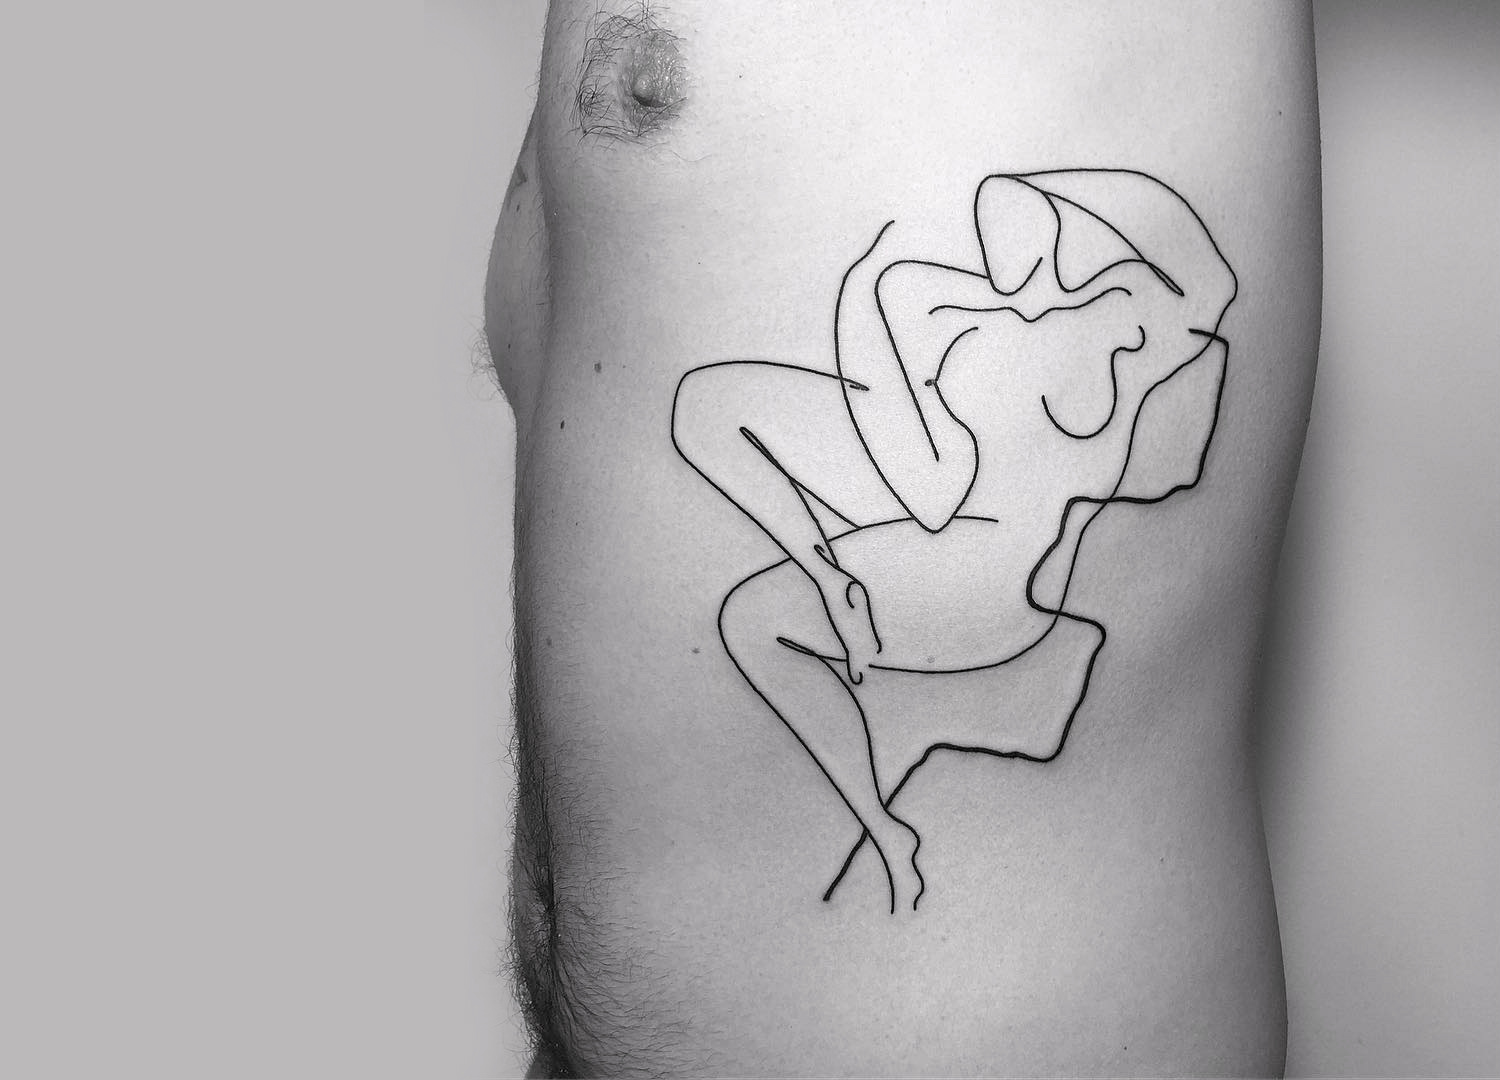 Minimal silhouette tattoo by Caleb Kilby